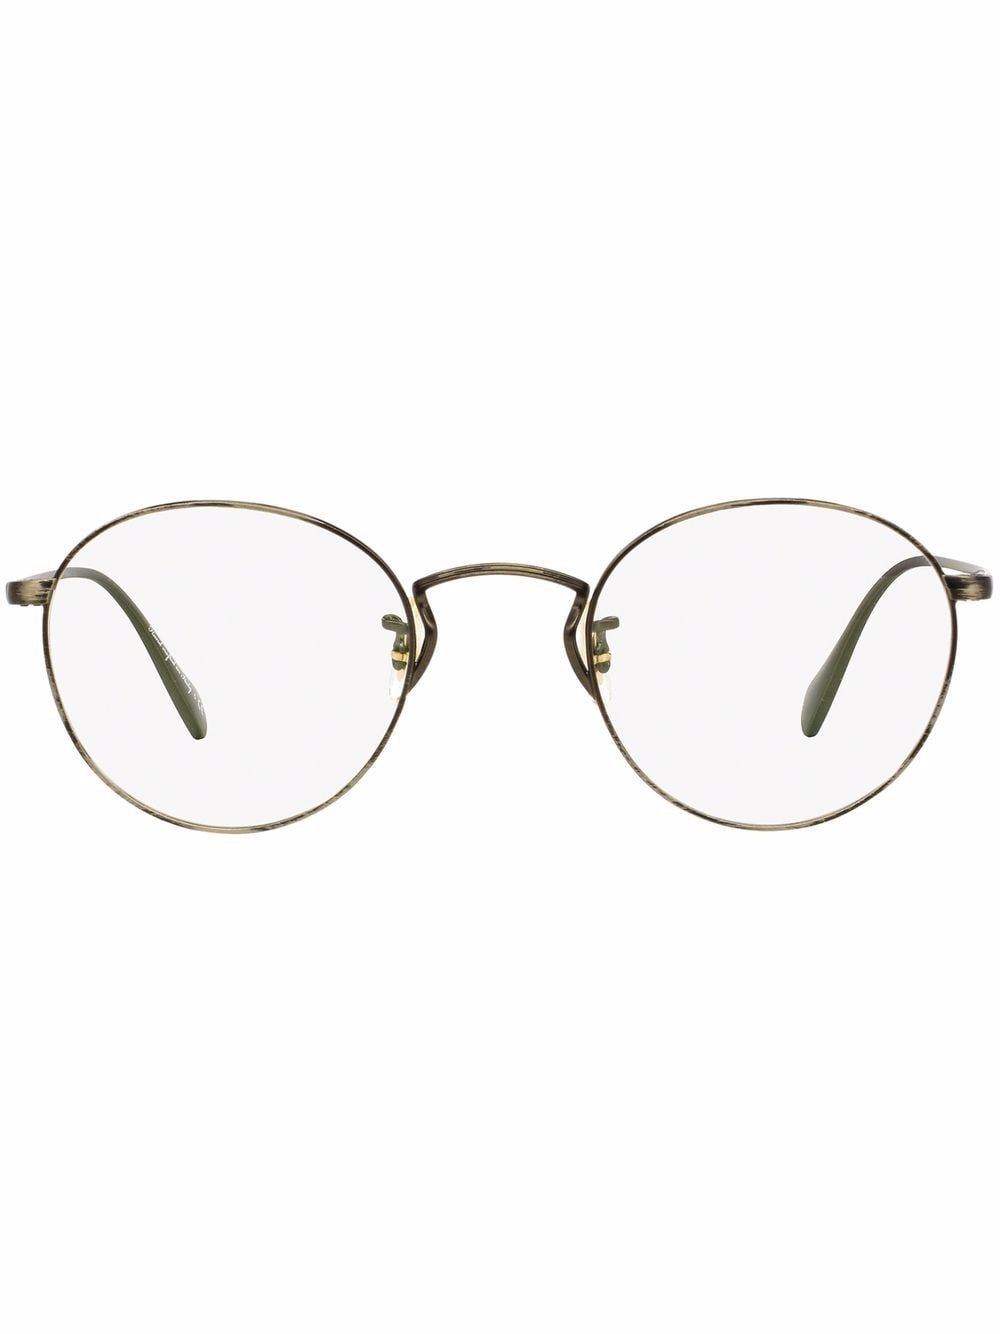 Image 1 of Oliver Peoples Coleridge round-frame glasses